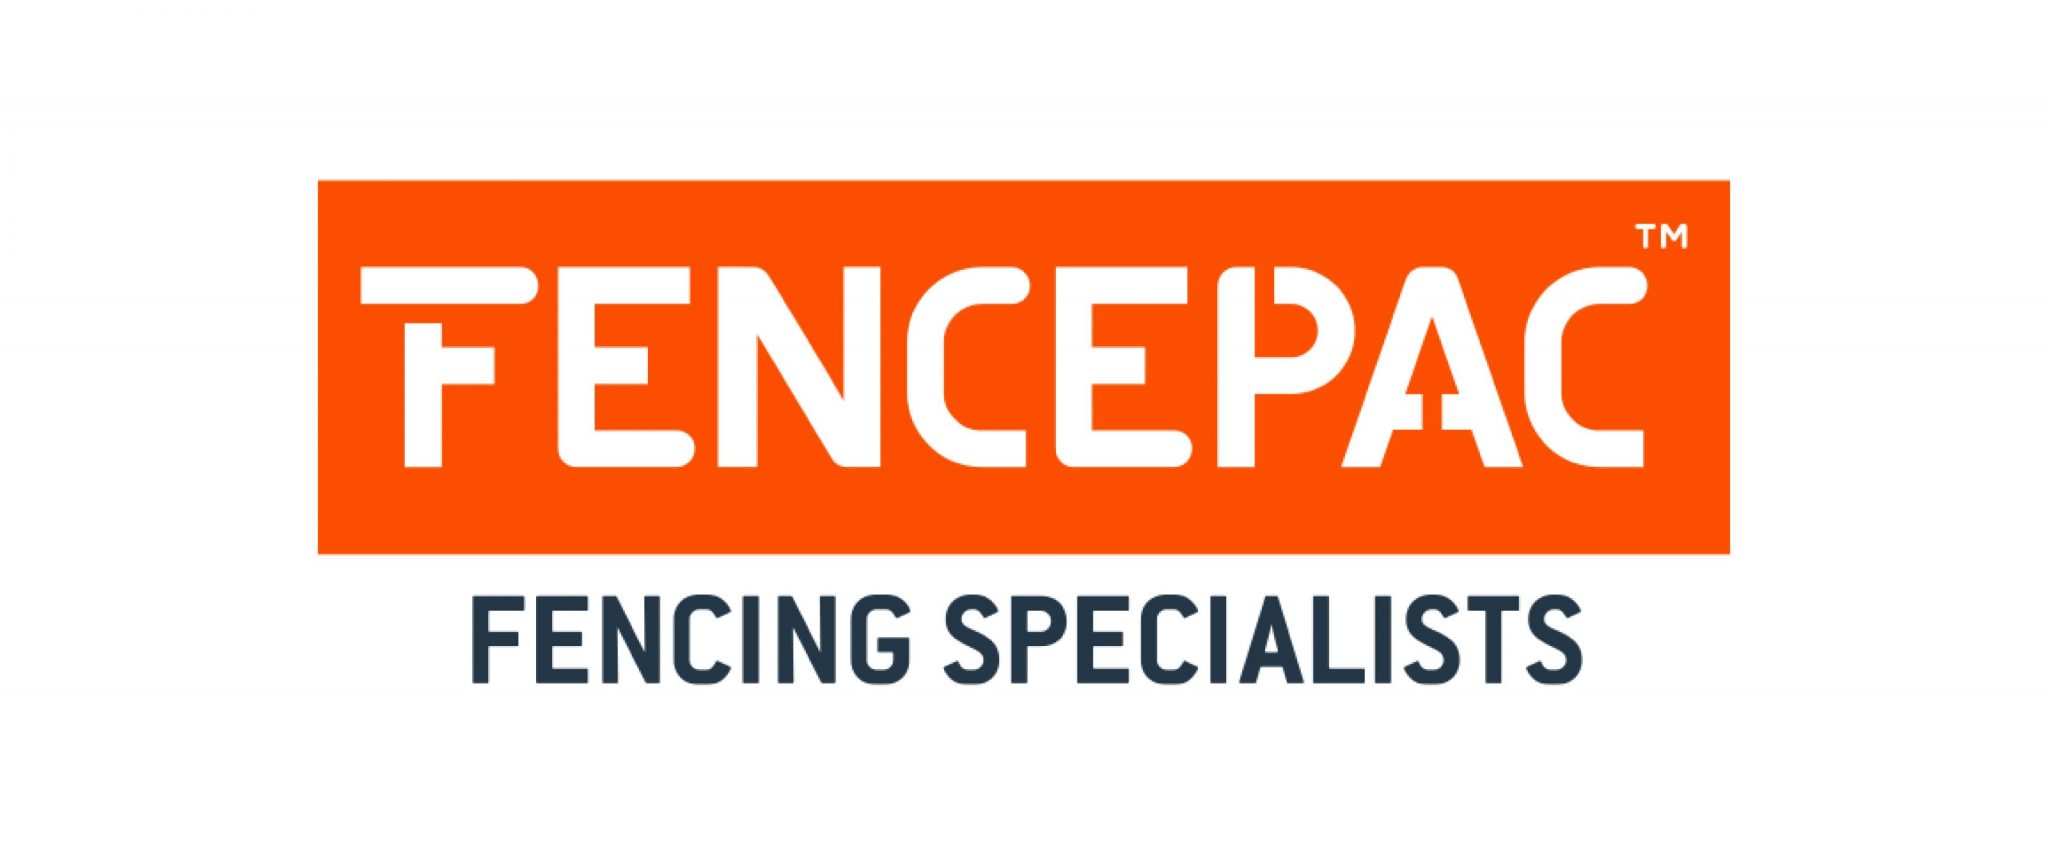 Fencepac corporate brand identity developed by Brisbane branding company